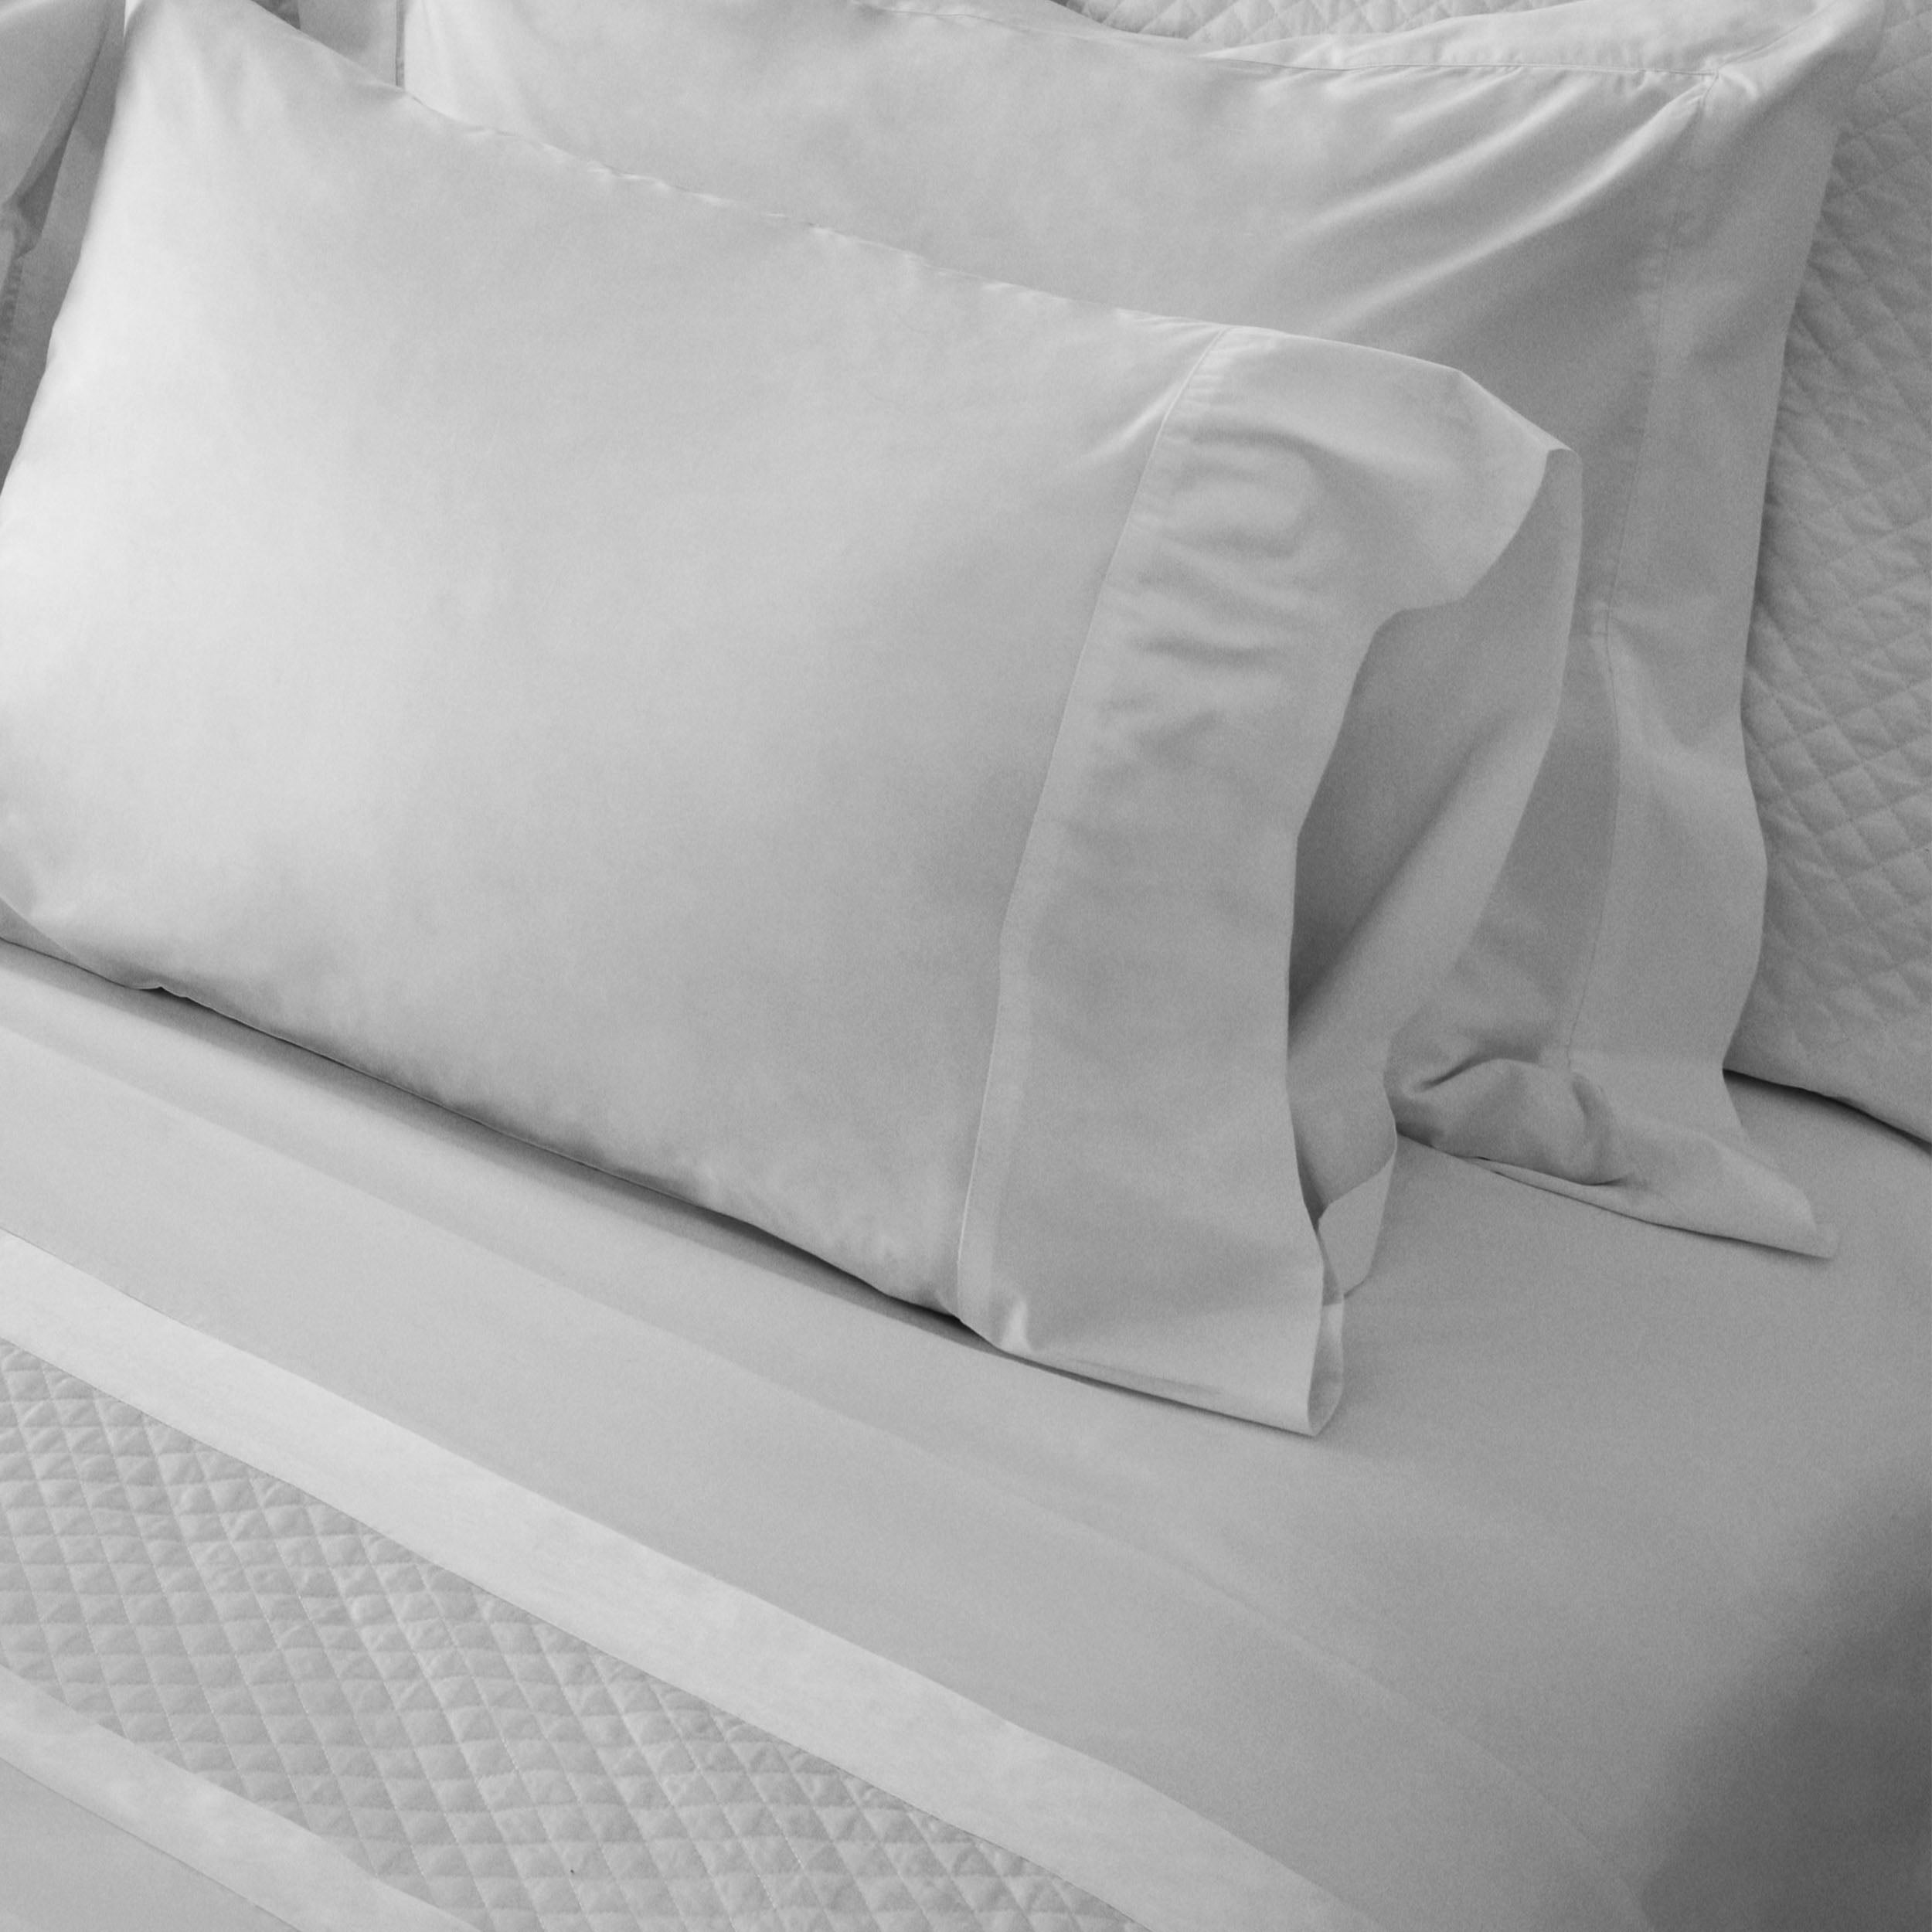 Grand Hotel Percale / Pillowcase King / Calacatta Gray, Grand Hotel Percale / Pillowcase Standard / Calacatta Gray